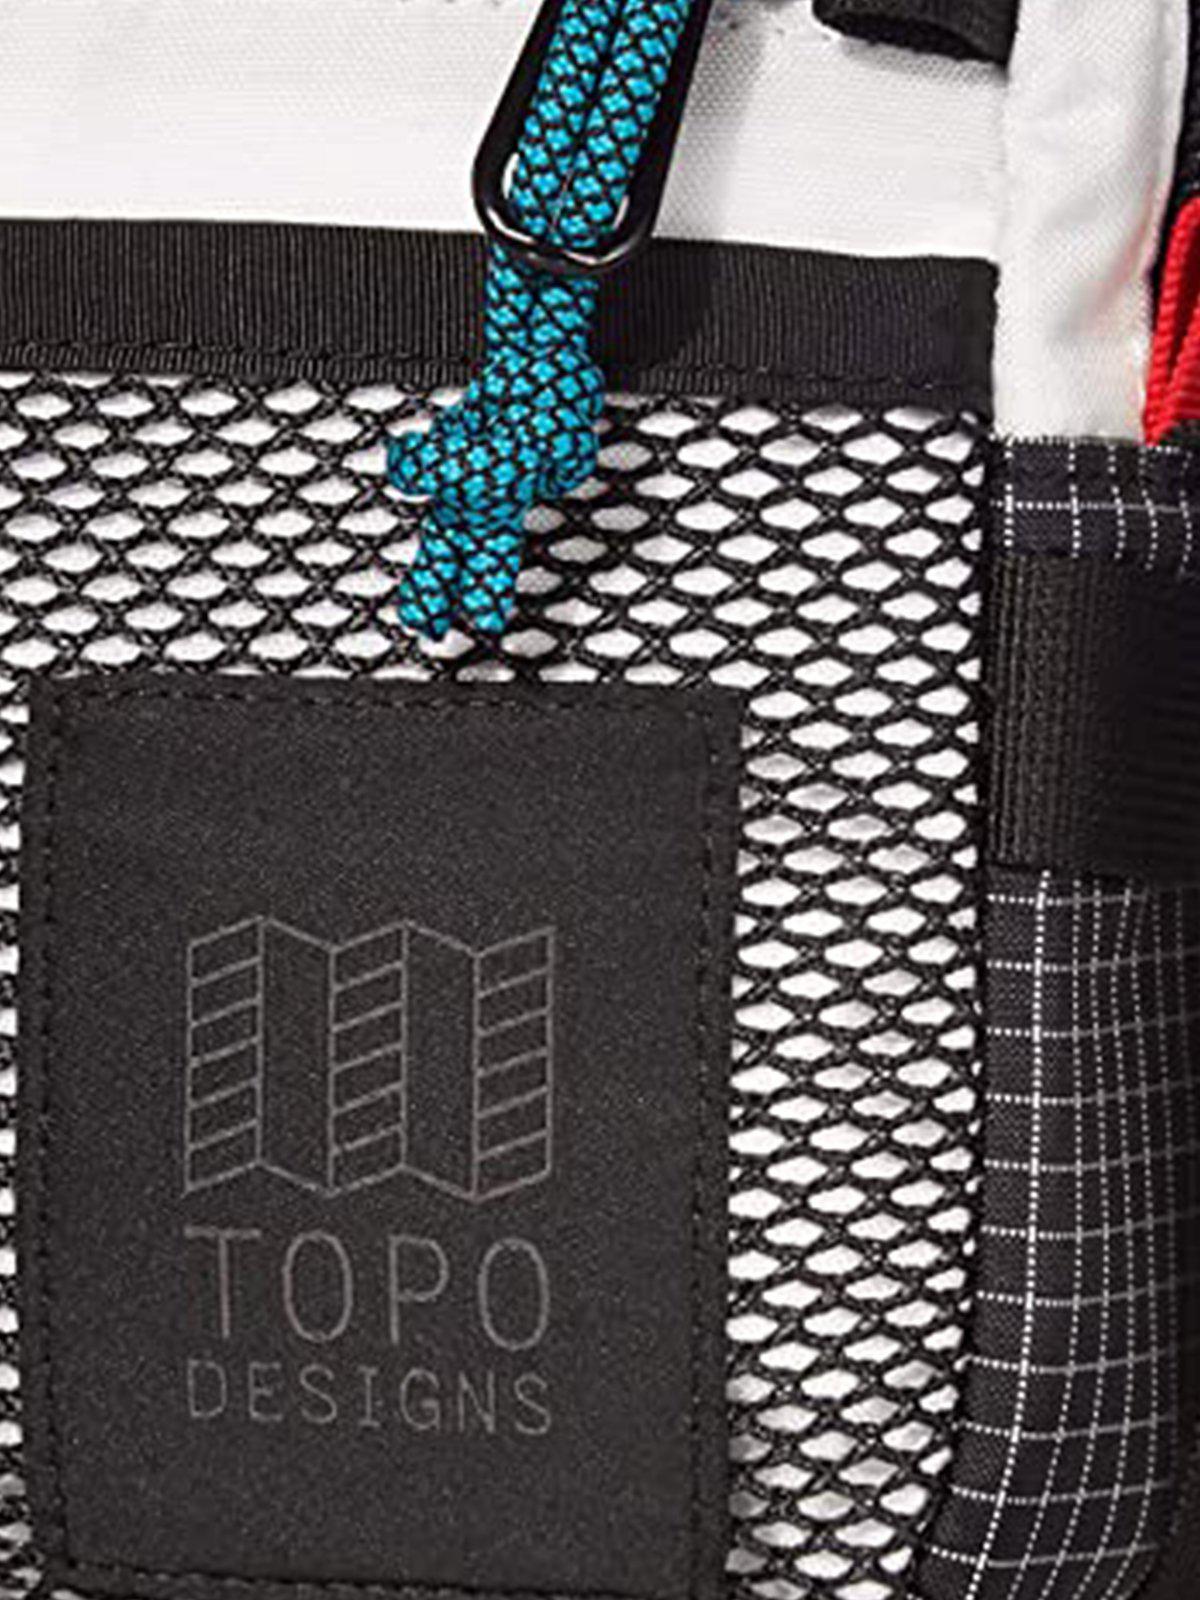 Topo Designs Block Bag White